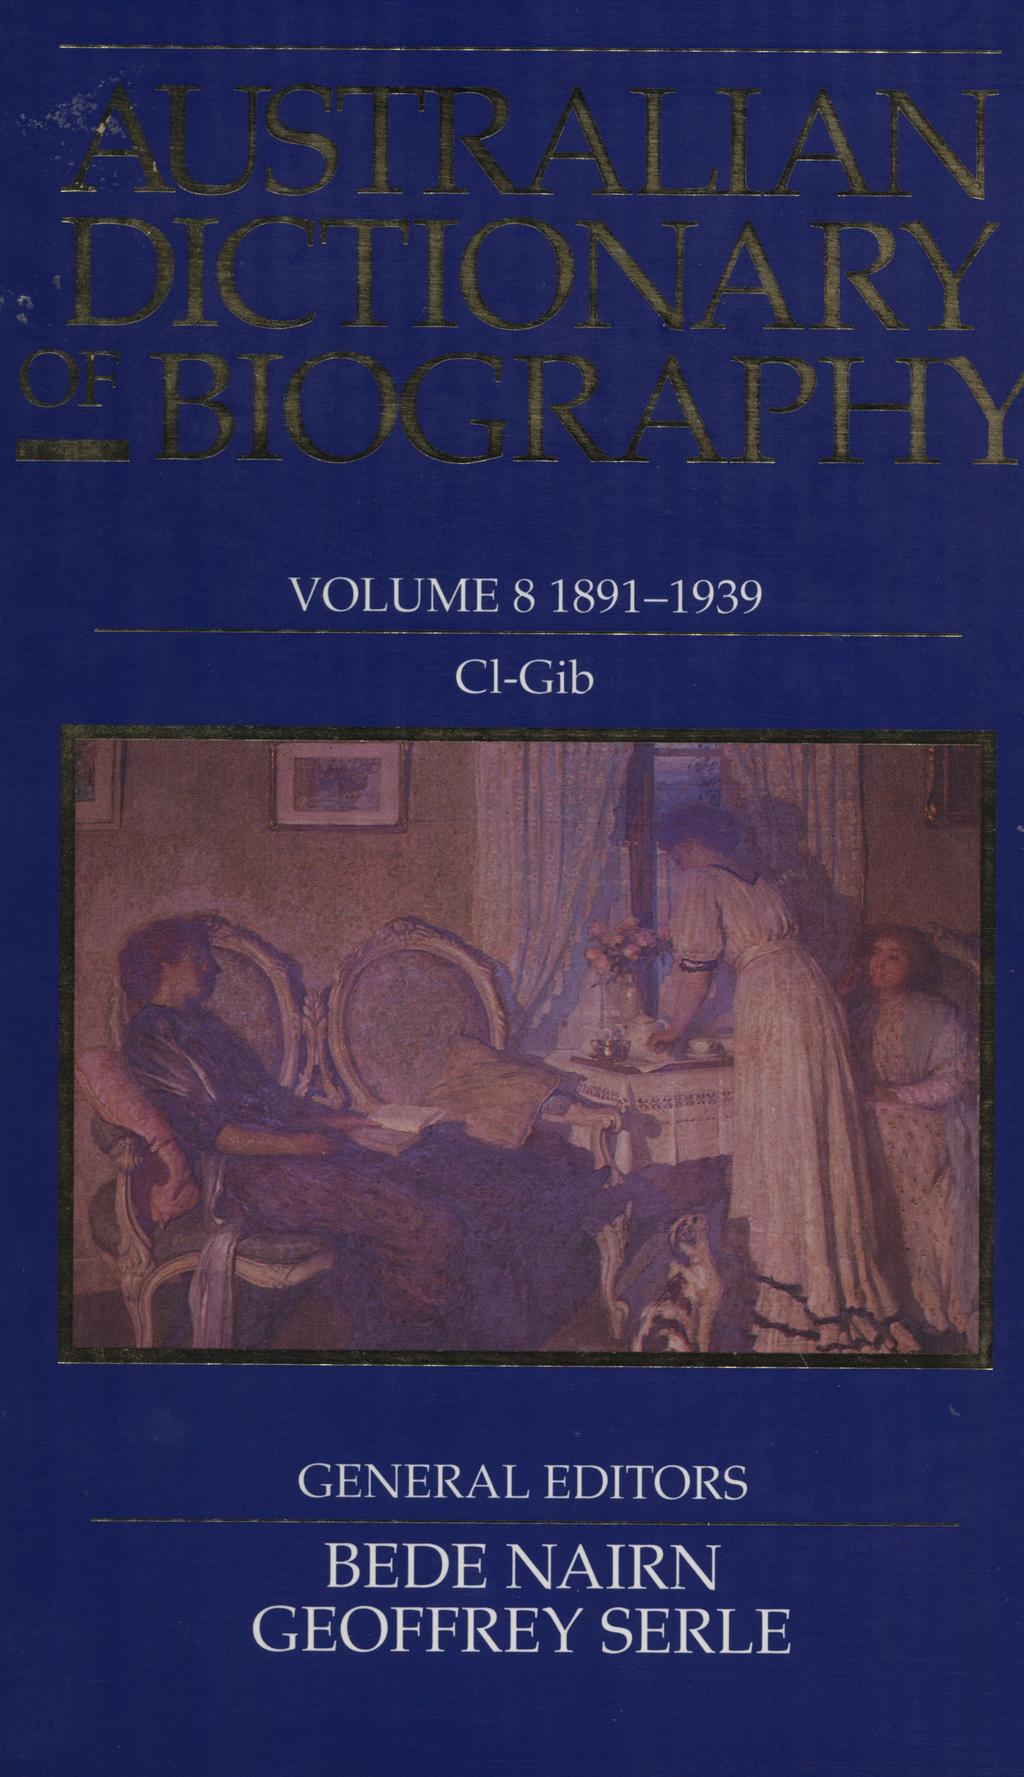 VOLUME 8 1891-1939 Cl-Gib GENERAL